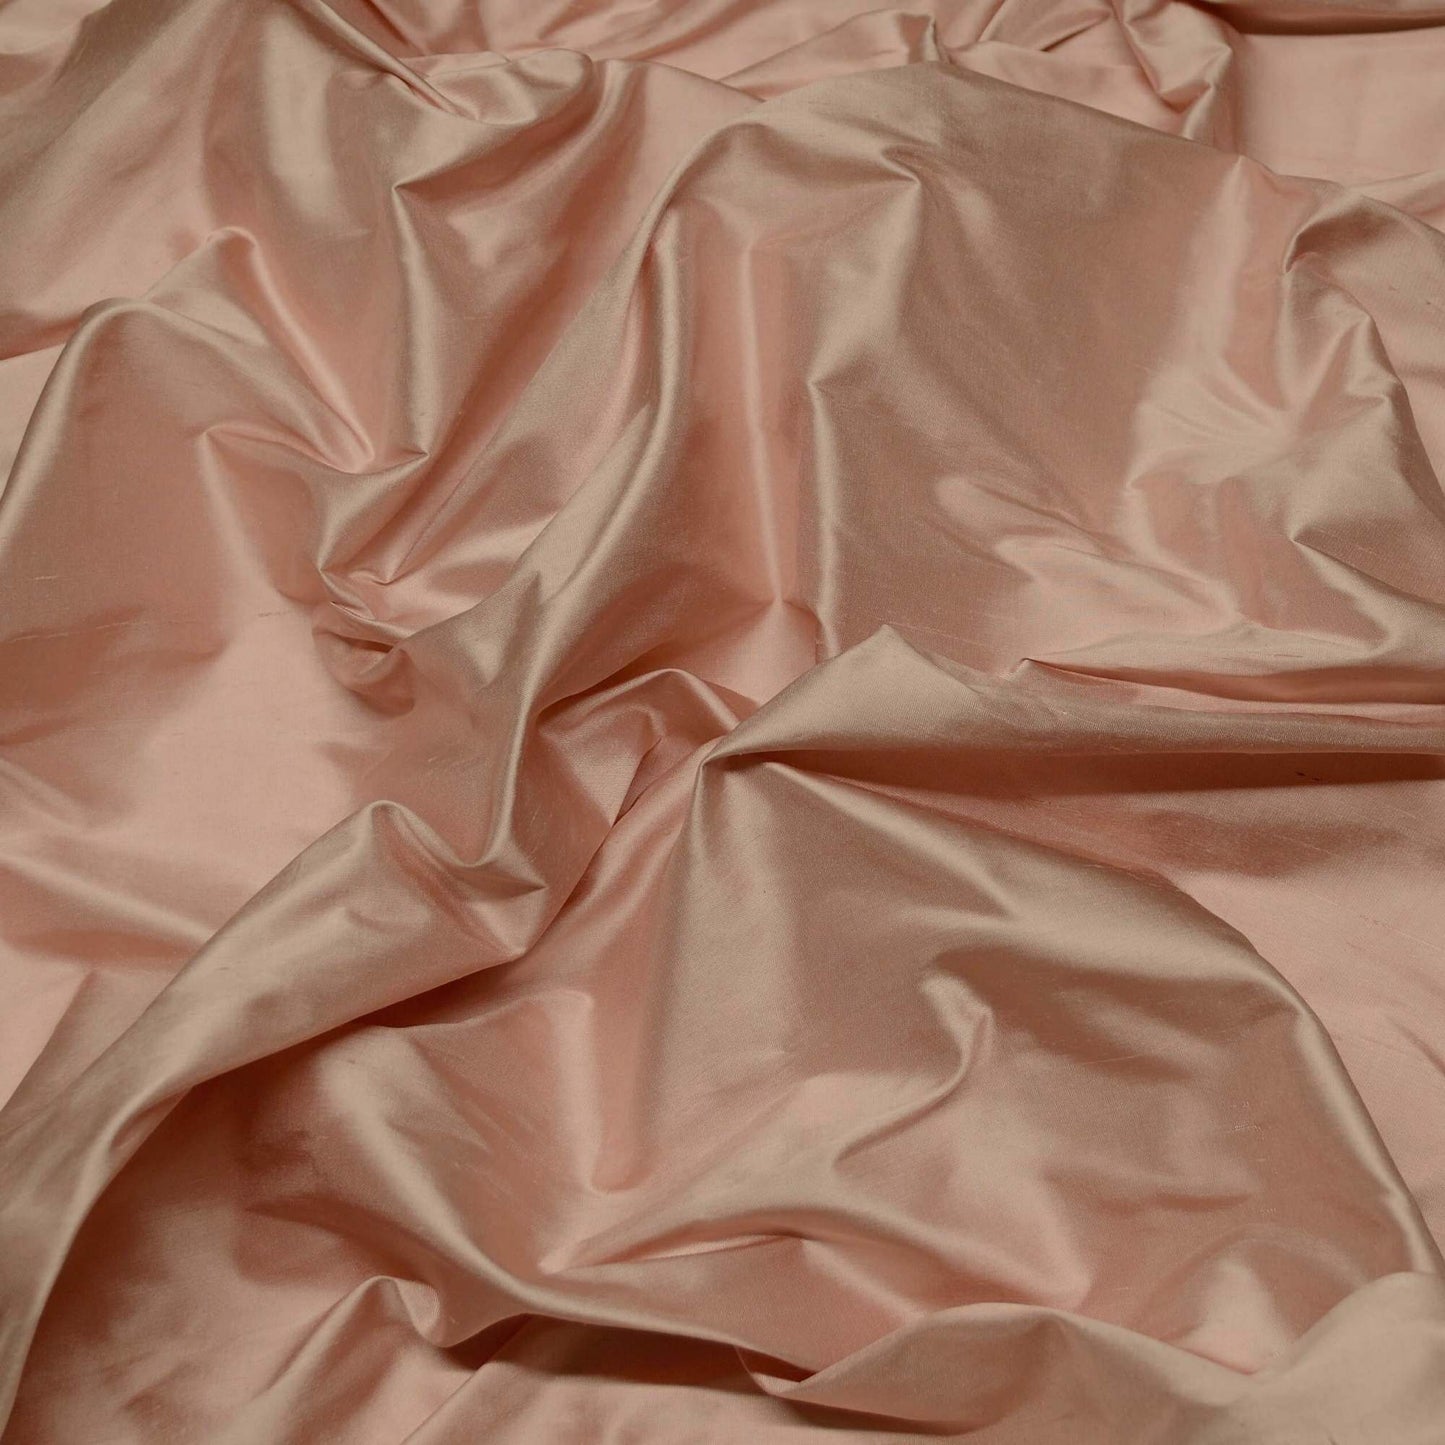 Fabric Swatches Dupioni Silk Rose Gold